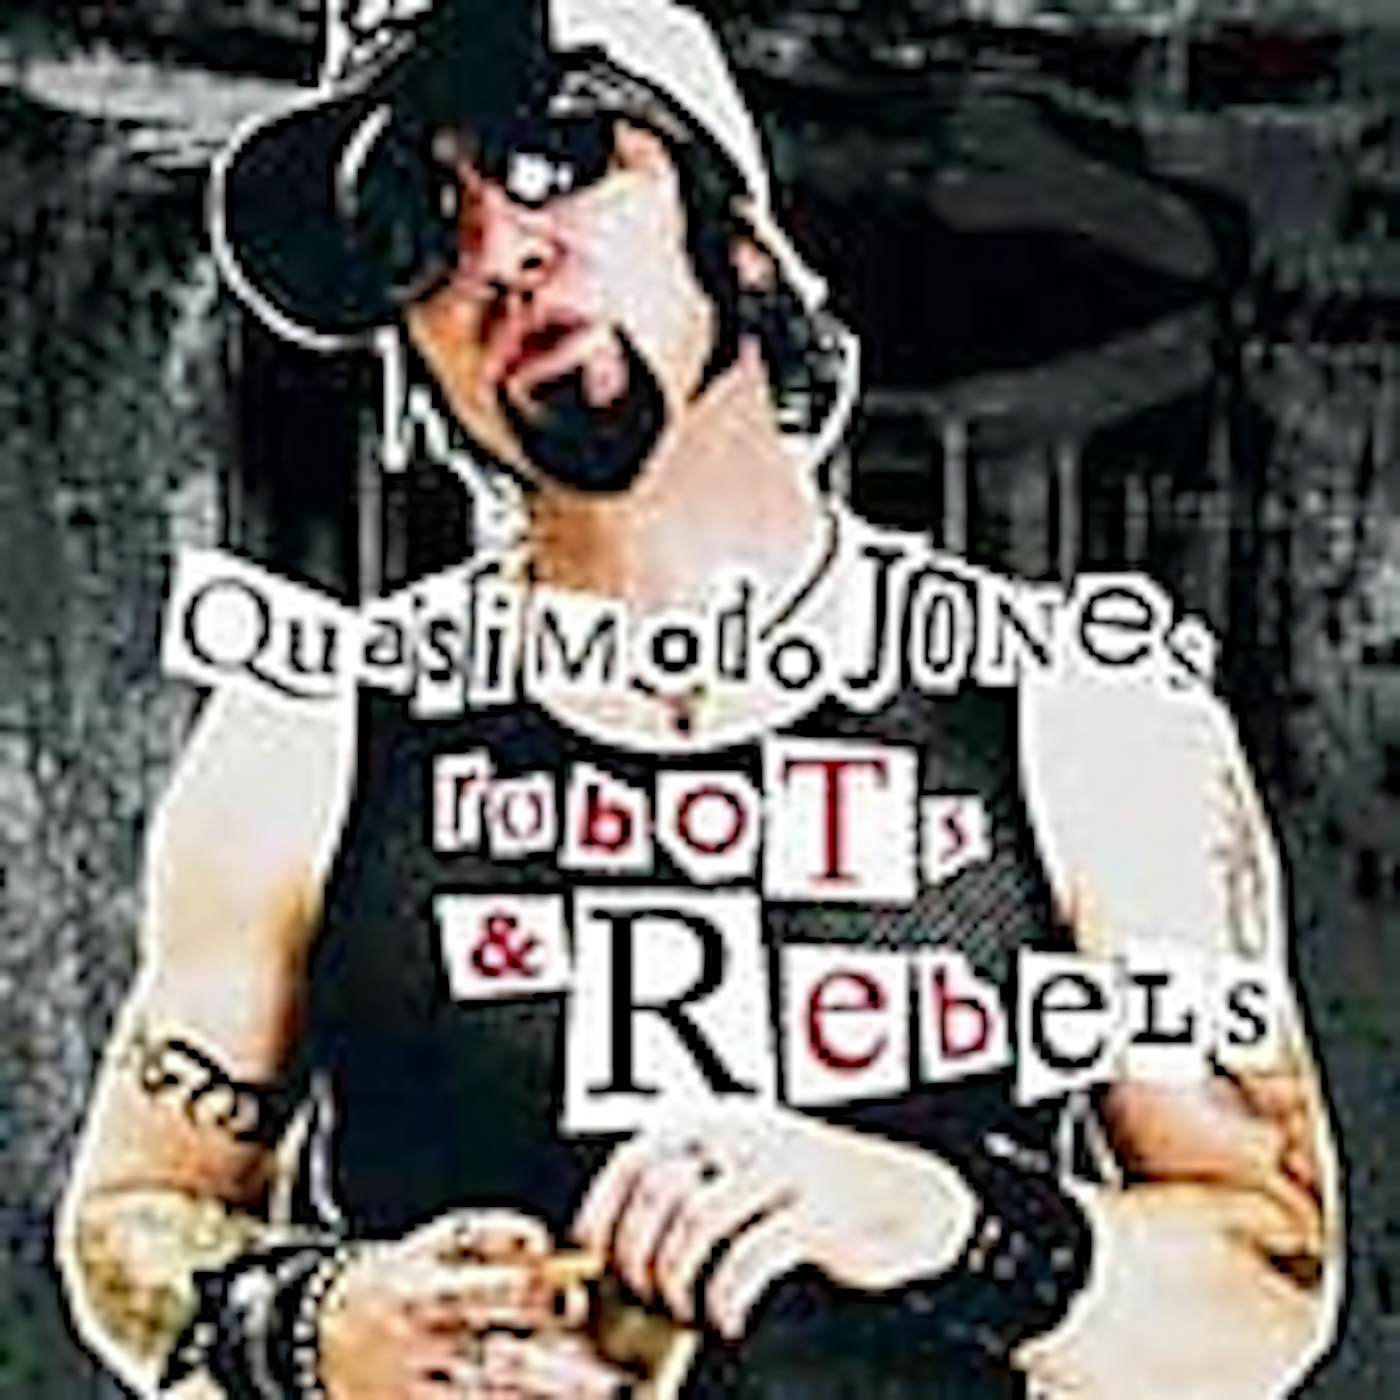 Quasimodo Jones ROBOTS & REBELS CD